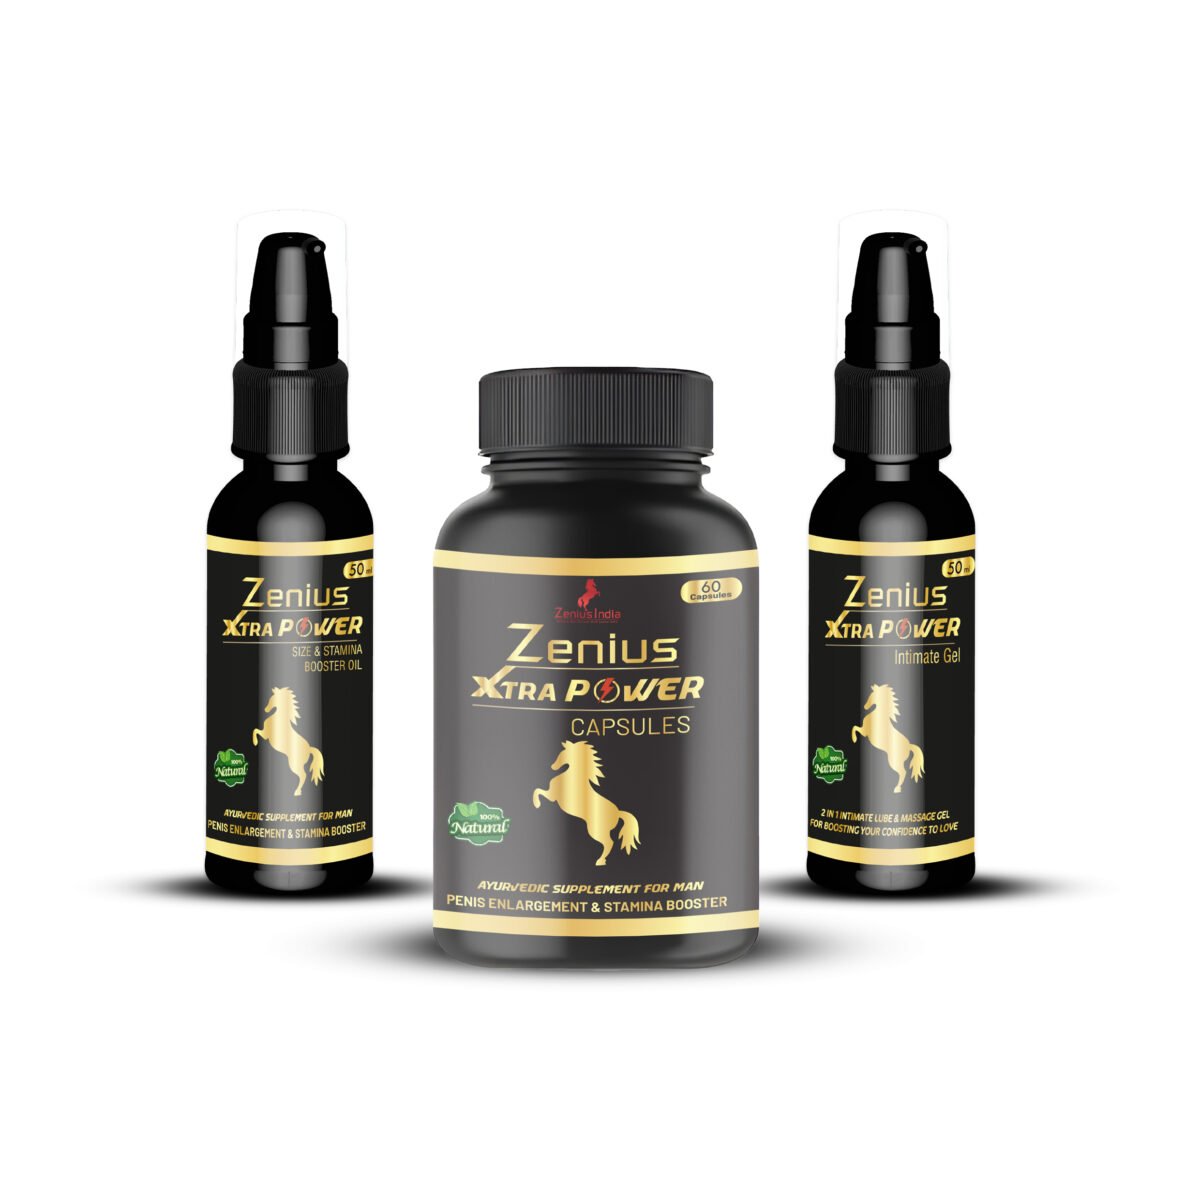 Stamina booster capsule | Sex oil for long time | Lubricating gel | Zenius Xtra Power Kit (60 Cap. 50ml Oil